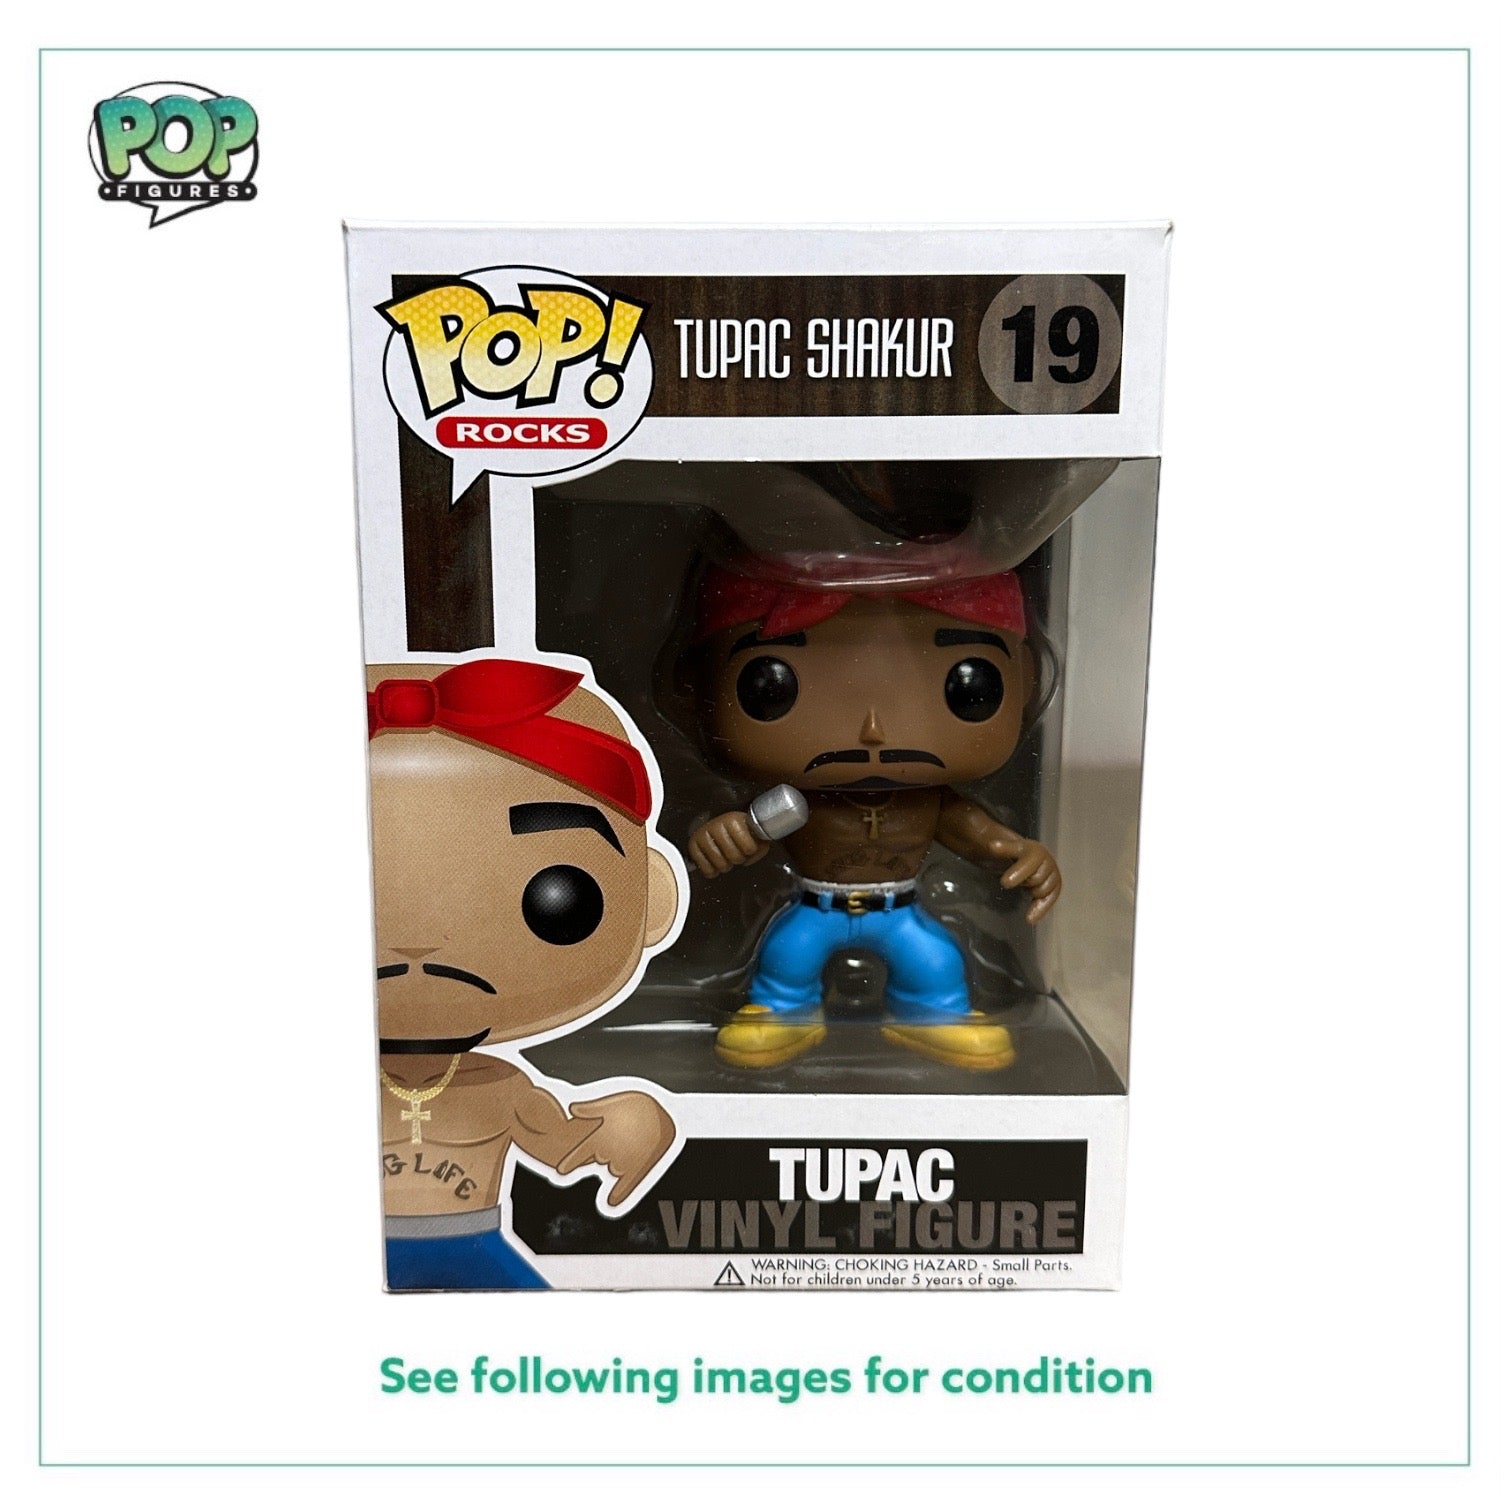 Tupac #19 Funko Pop! - Rocks - 2011 Pop! - Condition 8.5/10